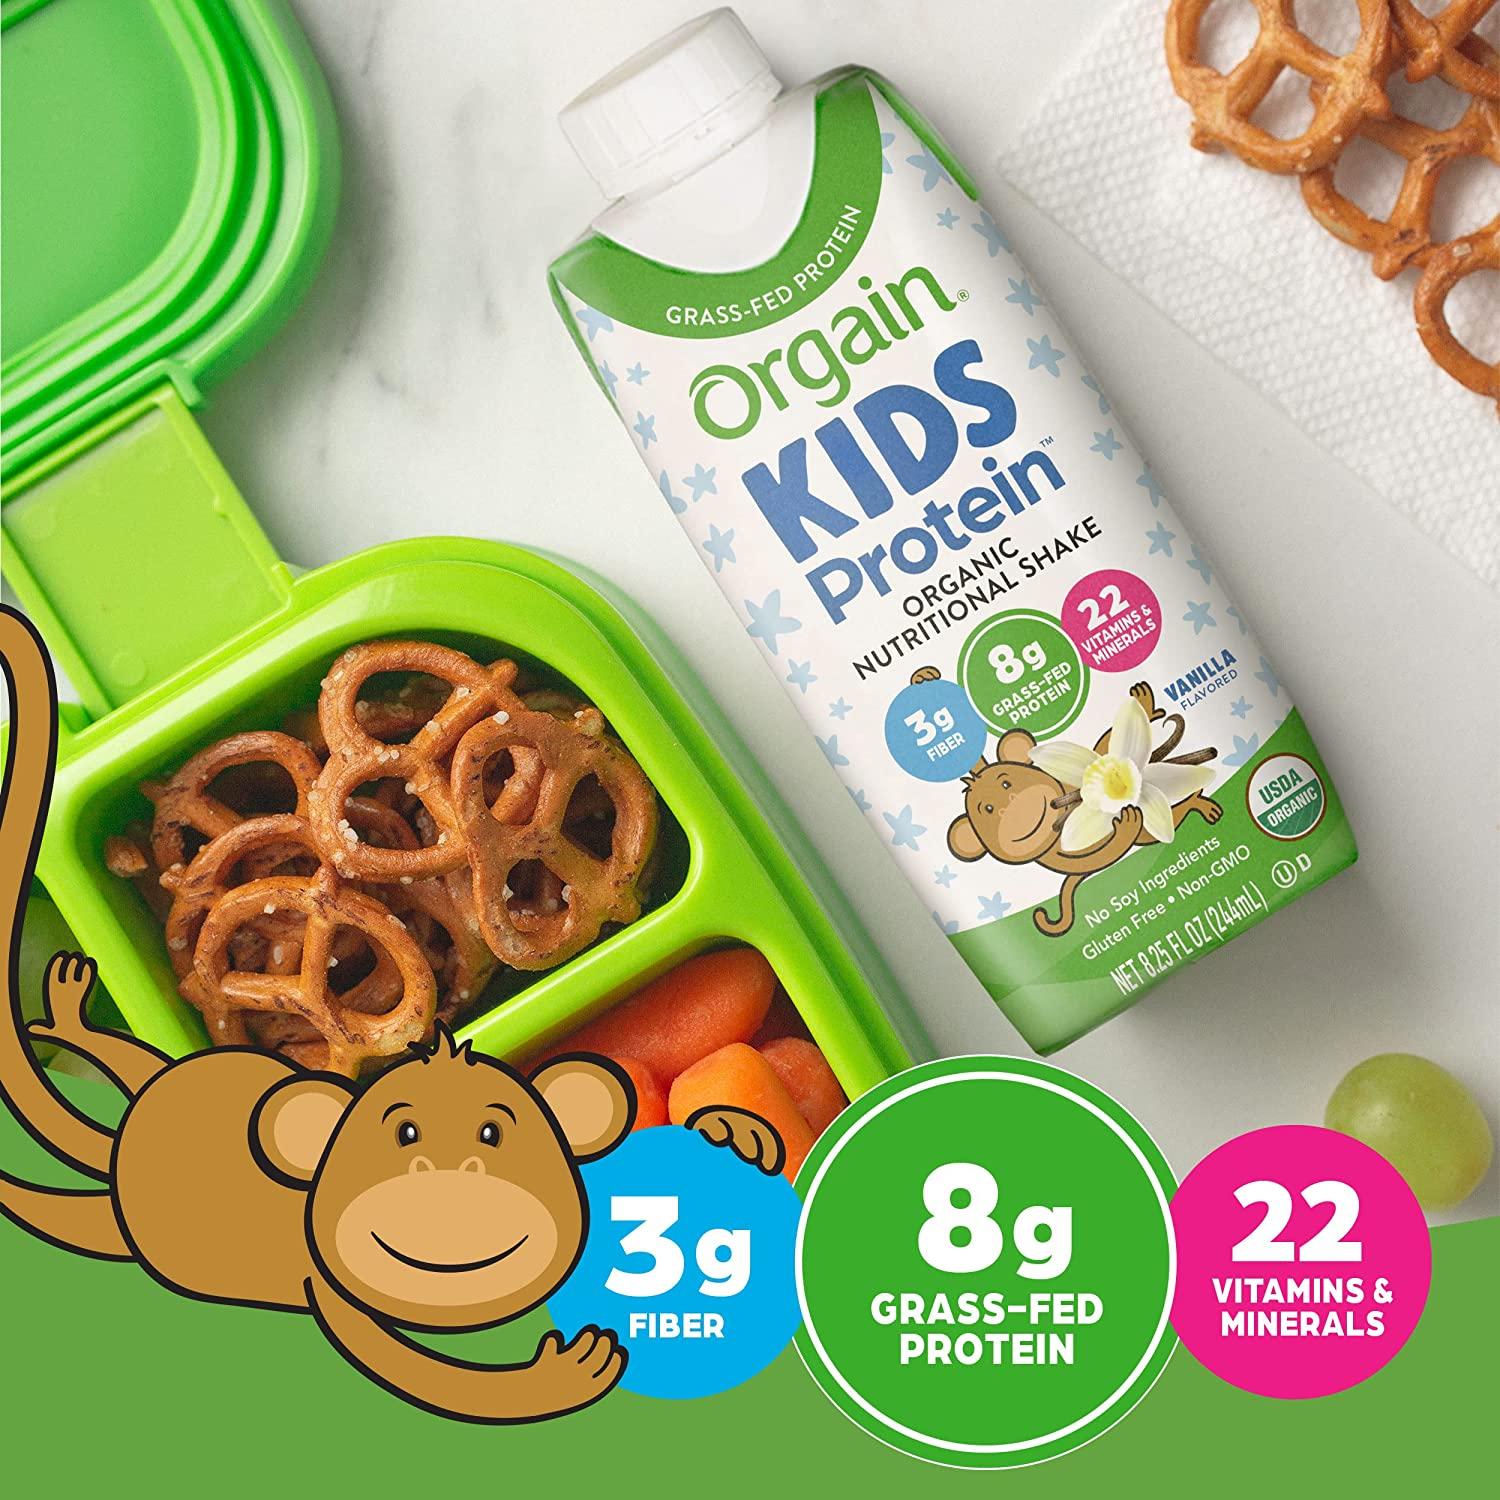 Orgain® Organic Vanilla Flavored Kids Protein™ Shake, 4 ct / 8.25